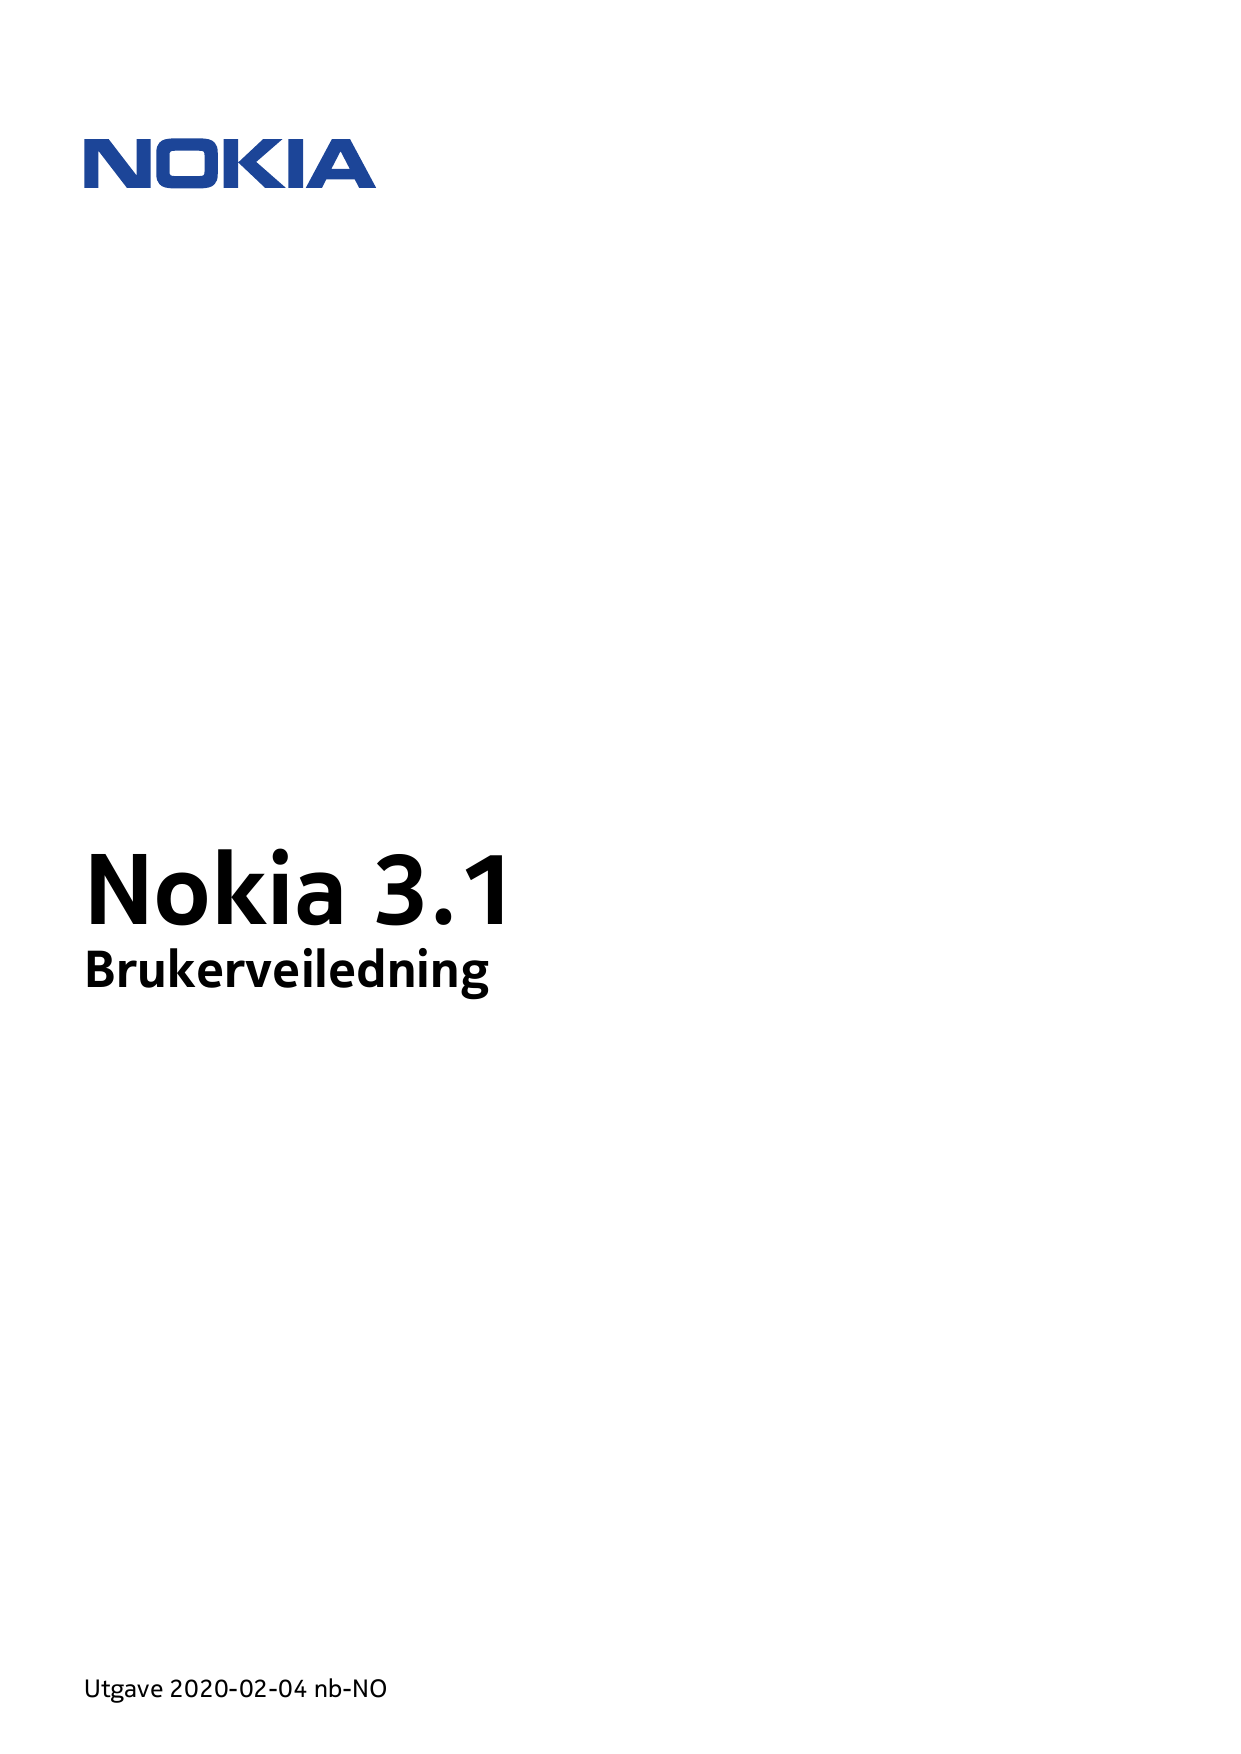 Nokia 3.1BrukerveiledningUtgave 2020-02-04 nb-NO